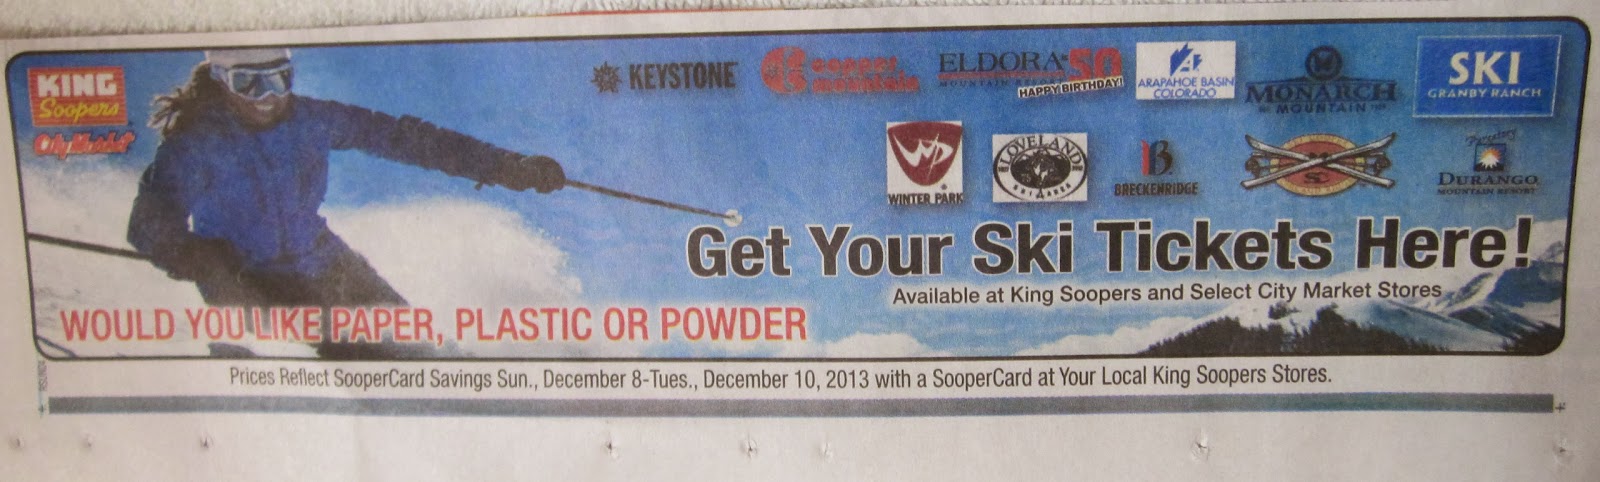 Colorado Ski Deals and Bargains: 2013 -2014 Ski Lift ...